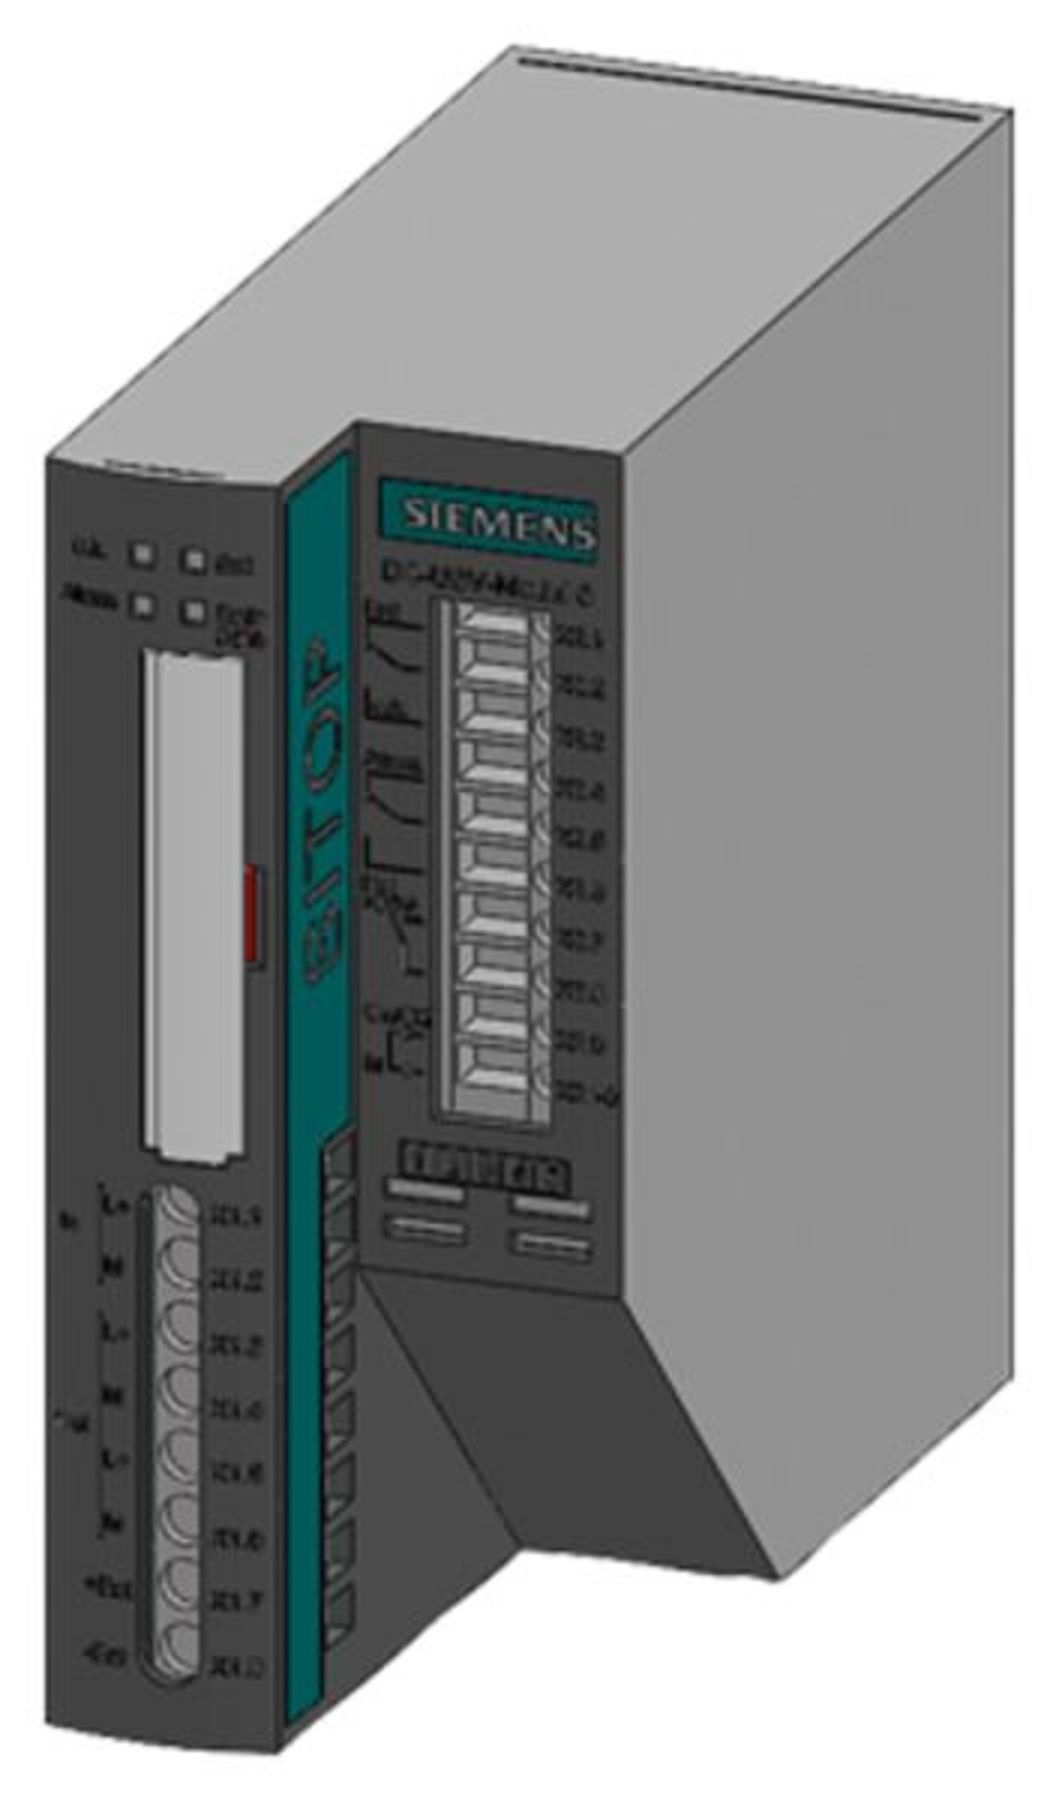 6EP19312EC21 Siemens 6EP1931-2EC21 Industrial Control System for sale online 